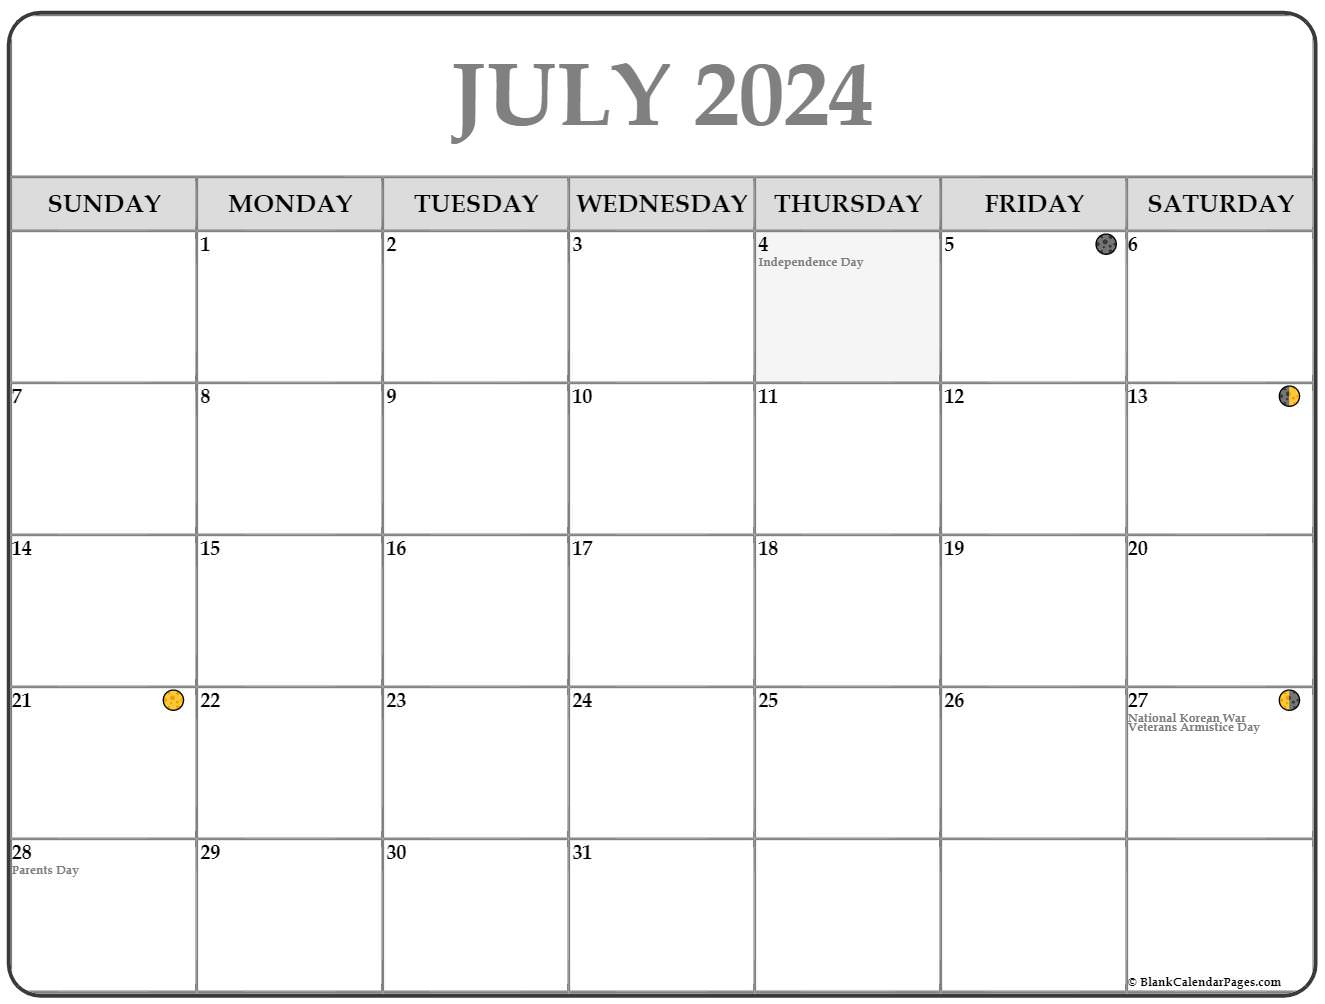 July 2024 Lunar Calendar | Moon Phase Calendar | Calendar Moon July 2024